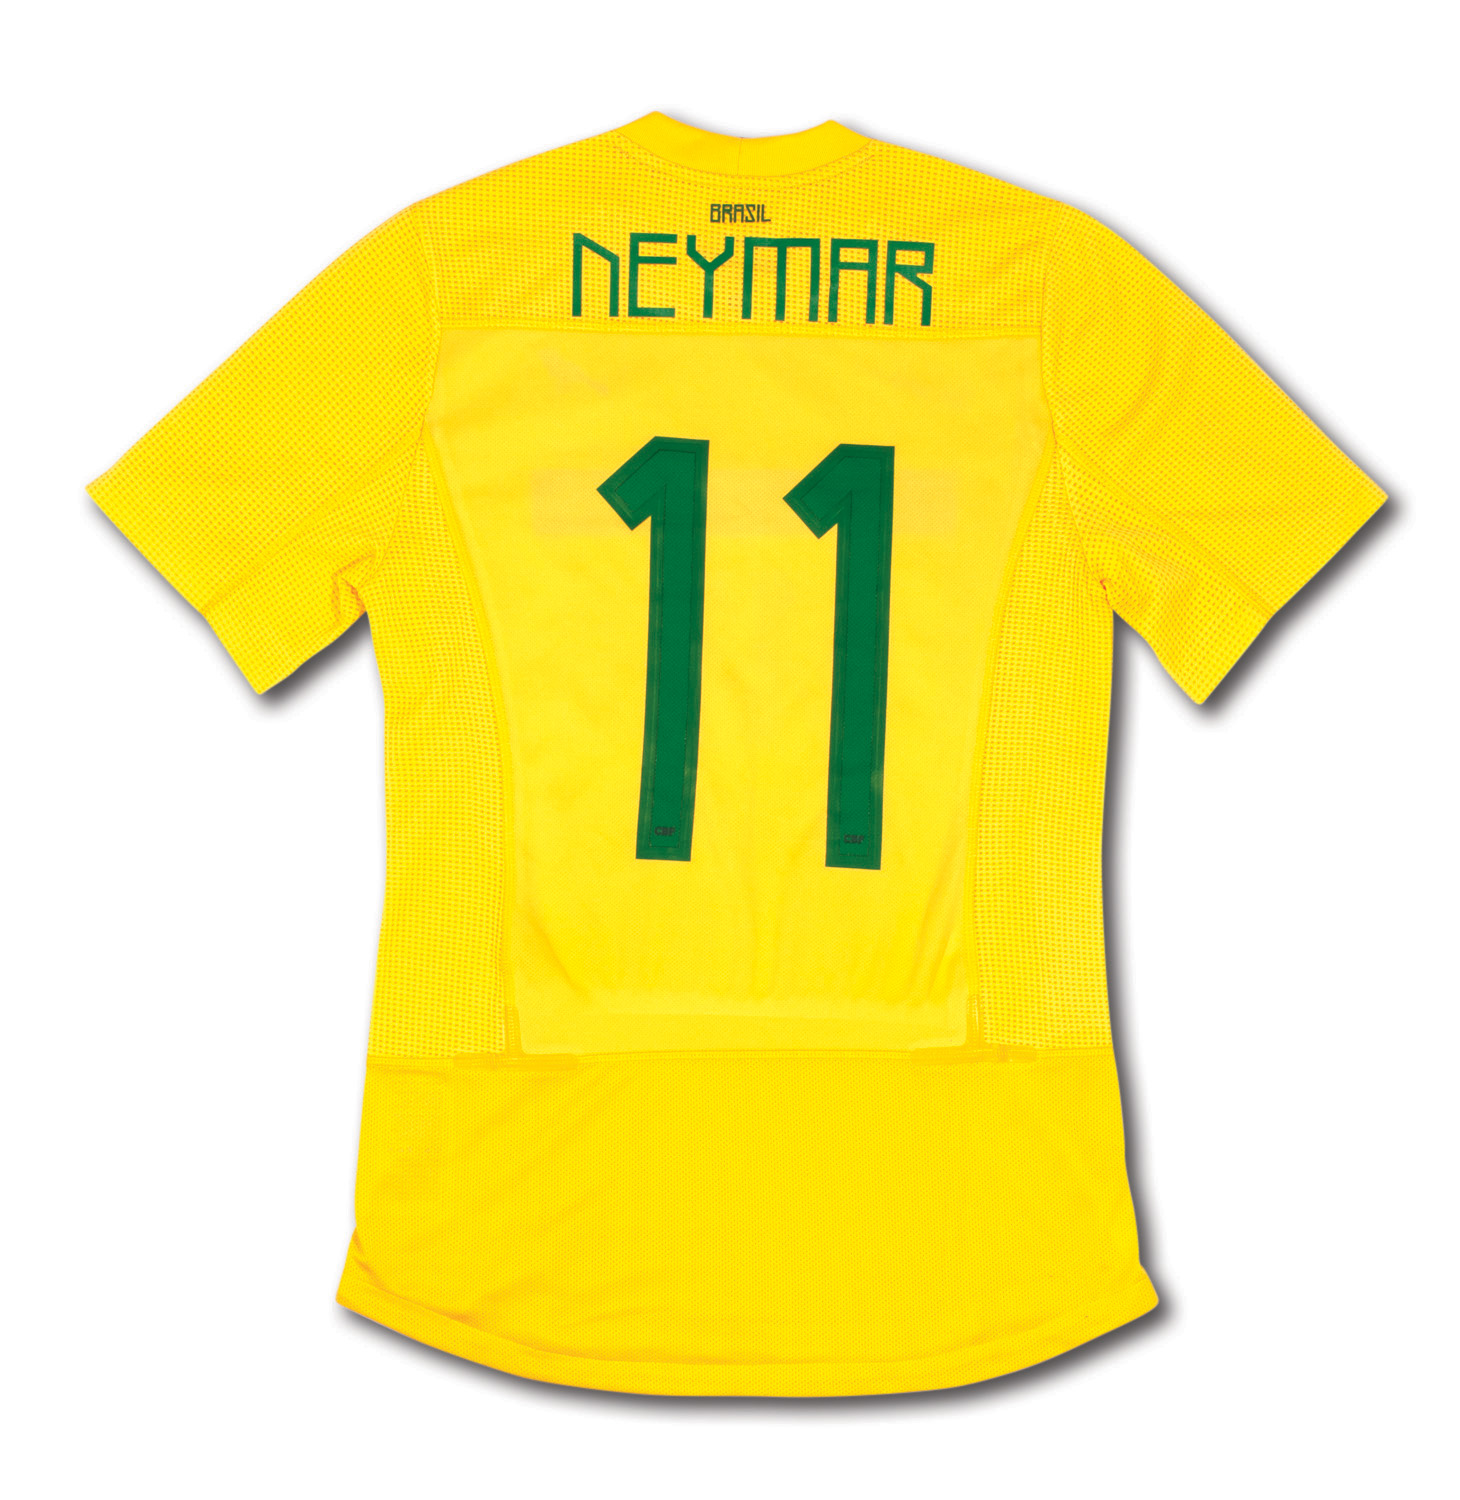 neymar brazil jersey number